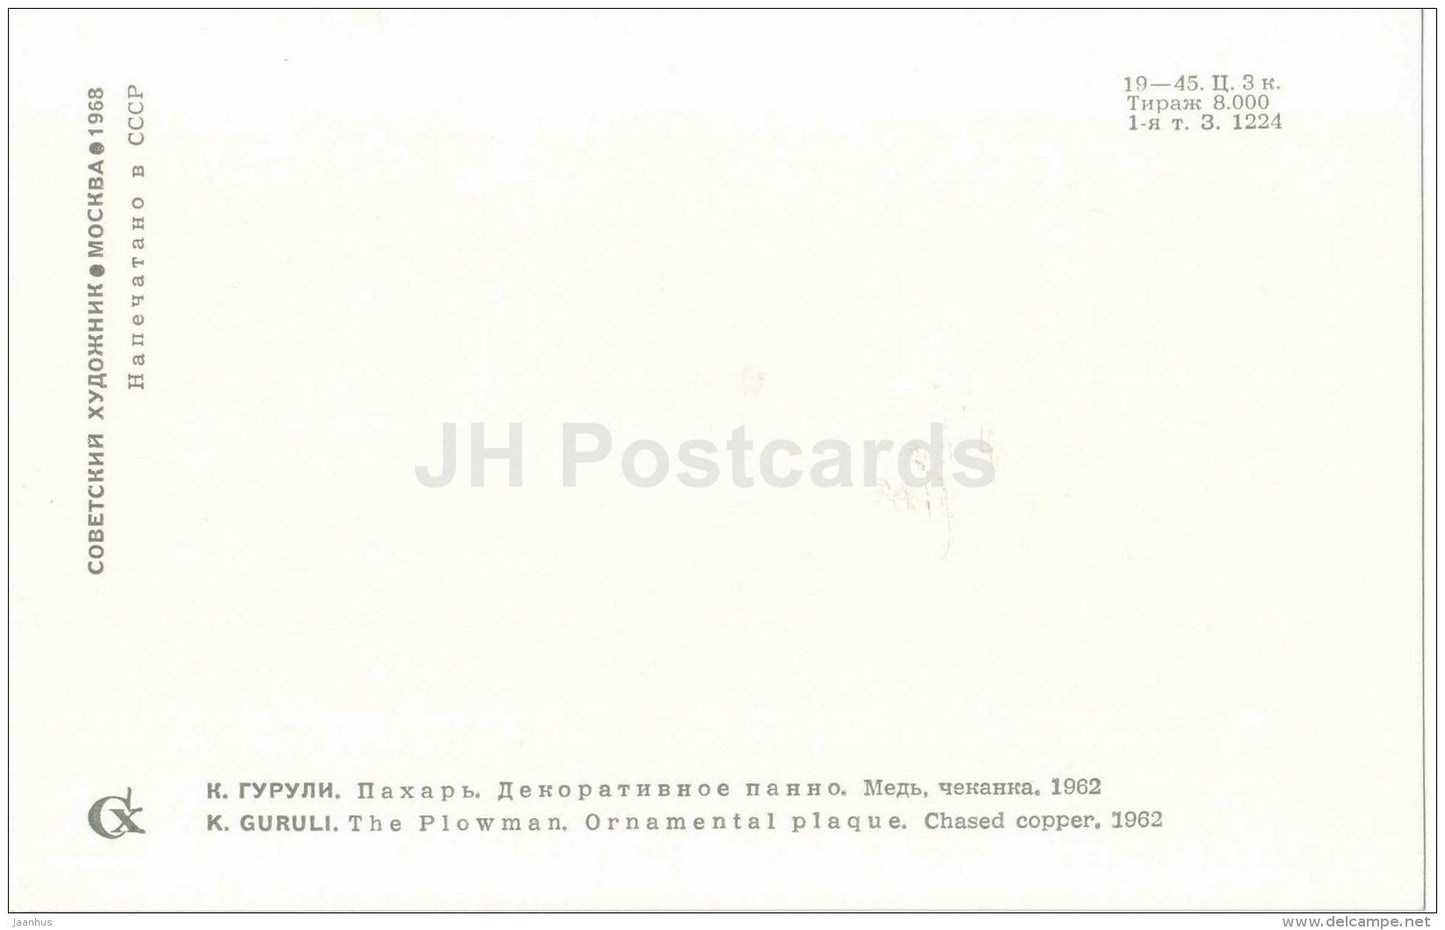 The Plowman by K. Guruli - ornamental plaque - Stamping and Ceramics of Georgia - 1968 - Georgia USSR - unused - JH Postcards